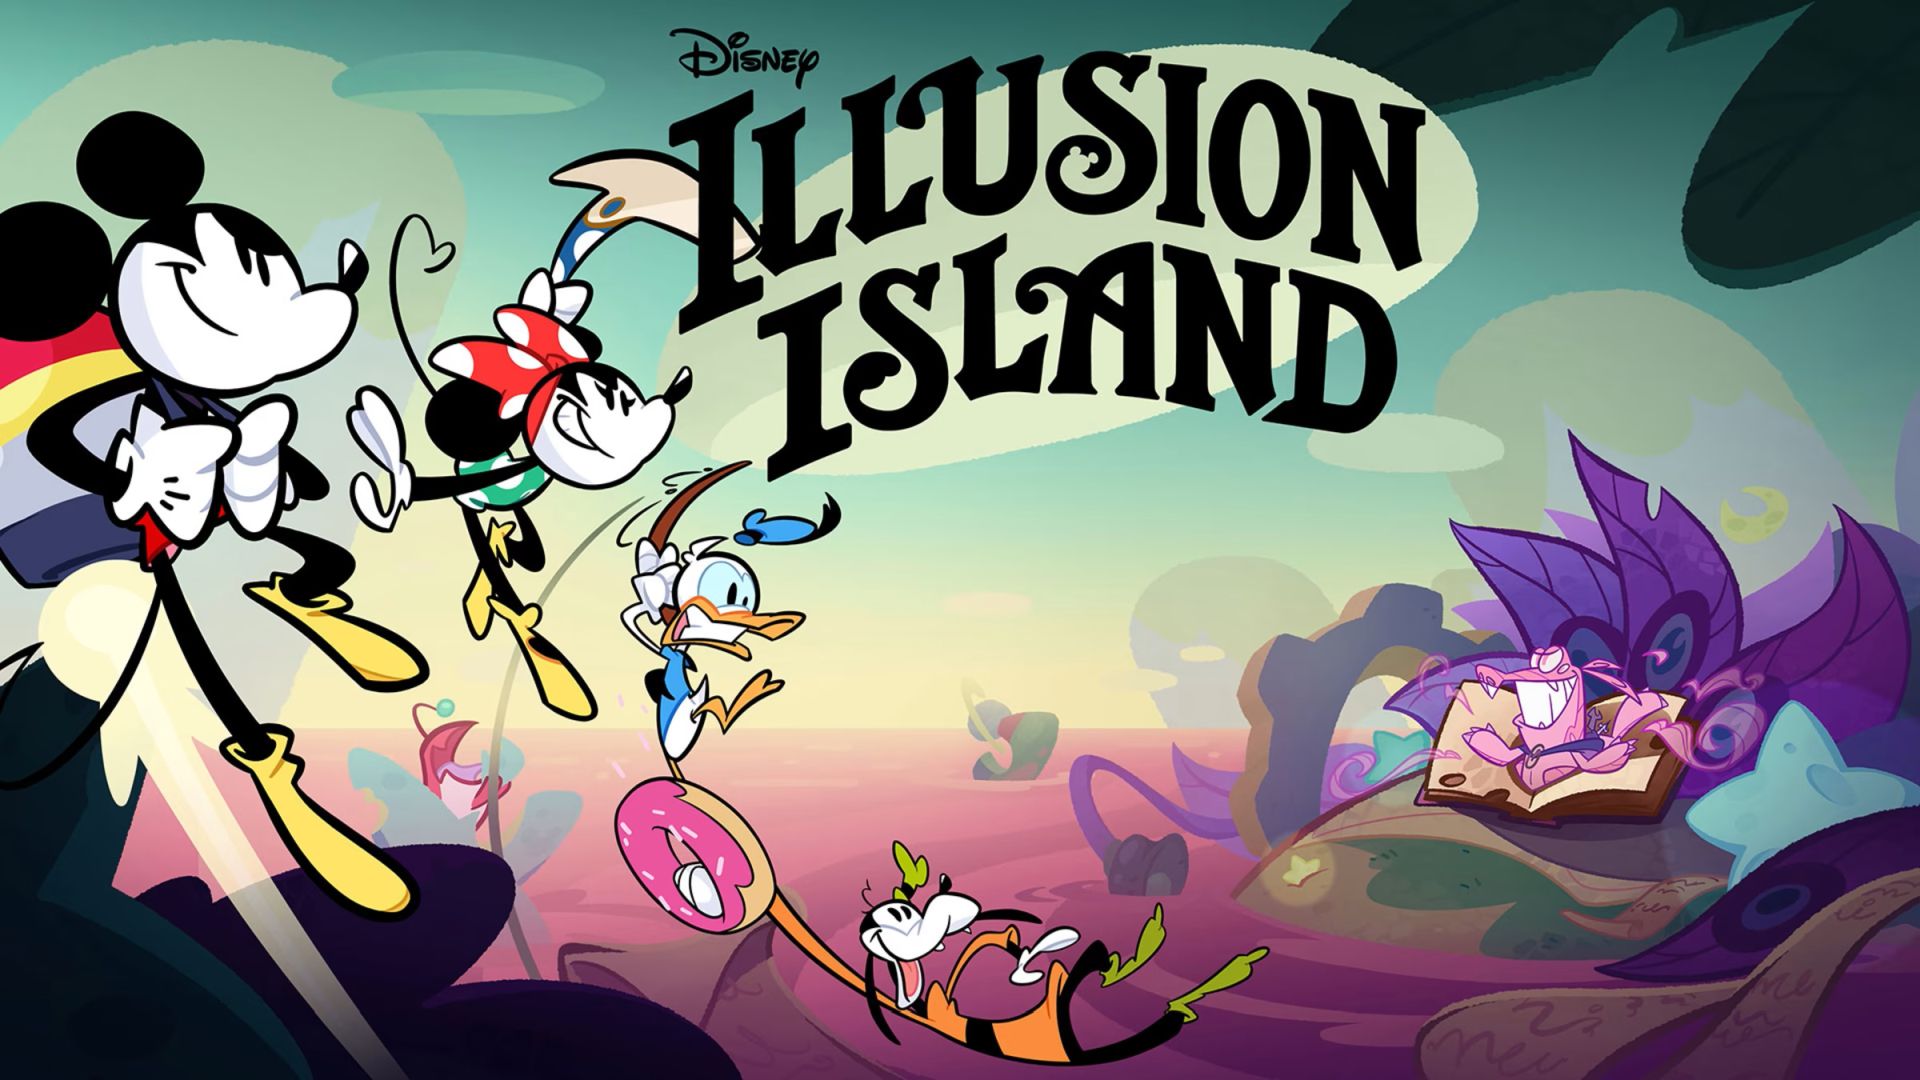 Video: Disney Illusion Island trailer